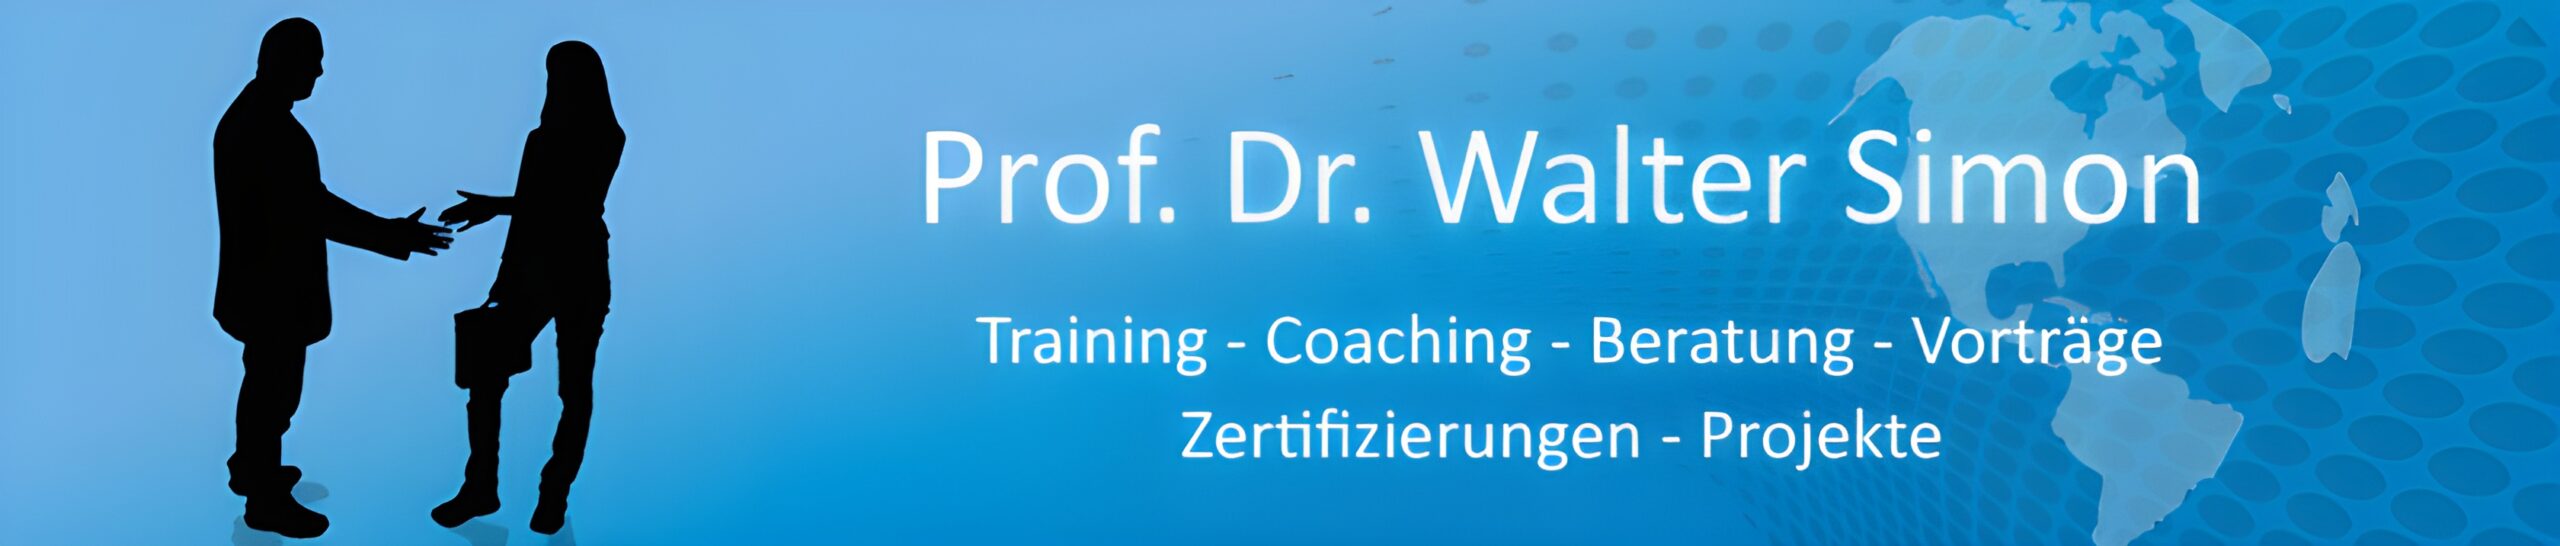 Prof. Dr. Walter Simon Training - Coaching